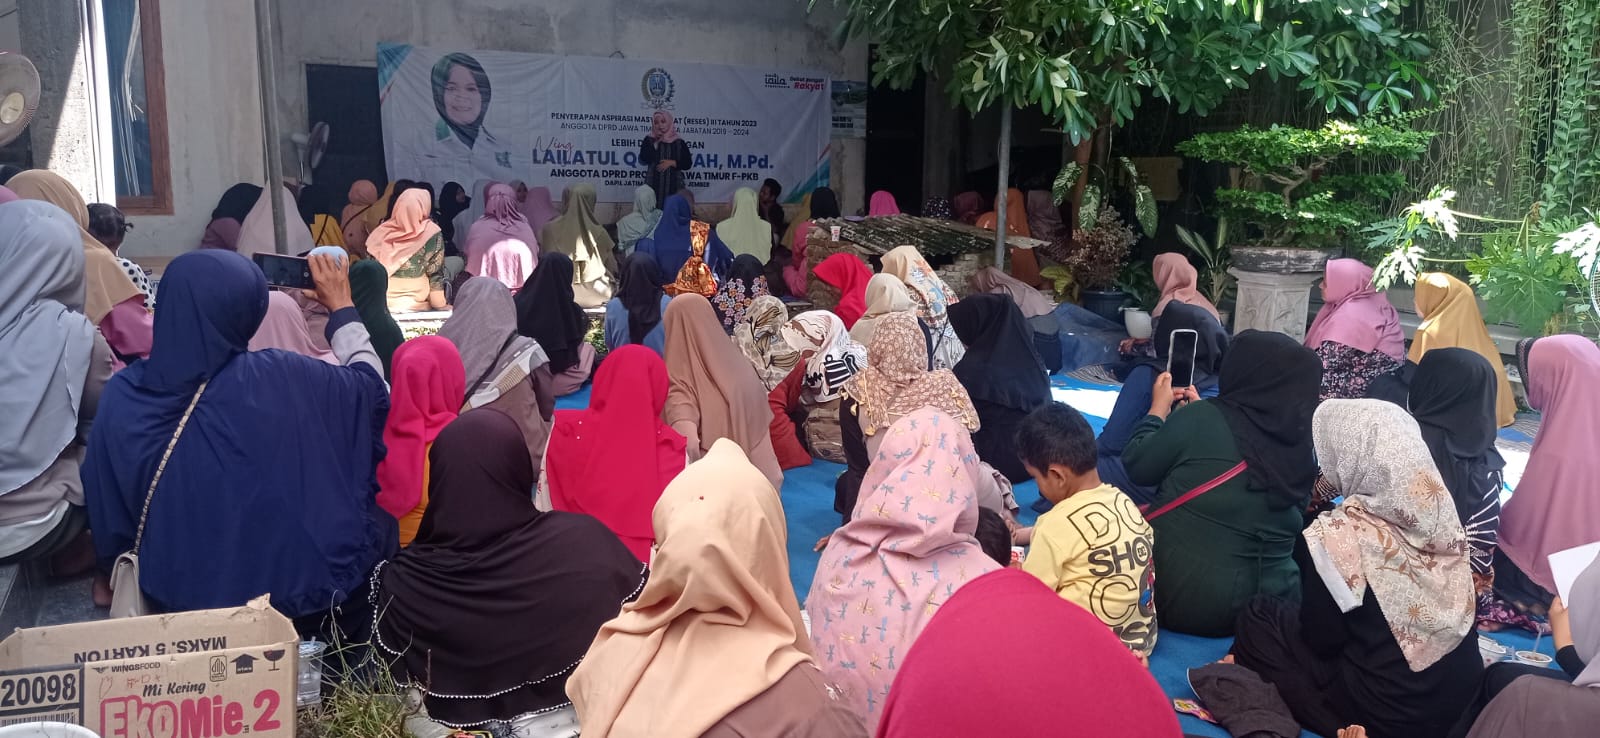 Anggota Komisi A DPRD Provinsi Jawa Timur Lailatul Qodriyah melakukan serap aspirasi di Desa Sumber Pinang, Kecamatan Pakusari, Kabupaten Jember